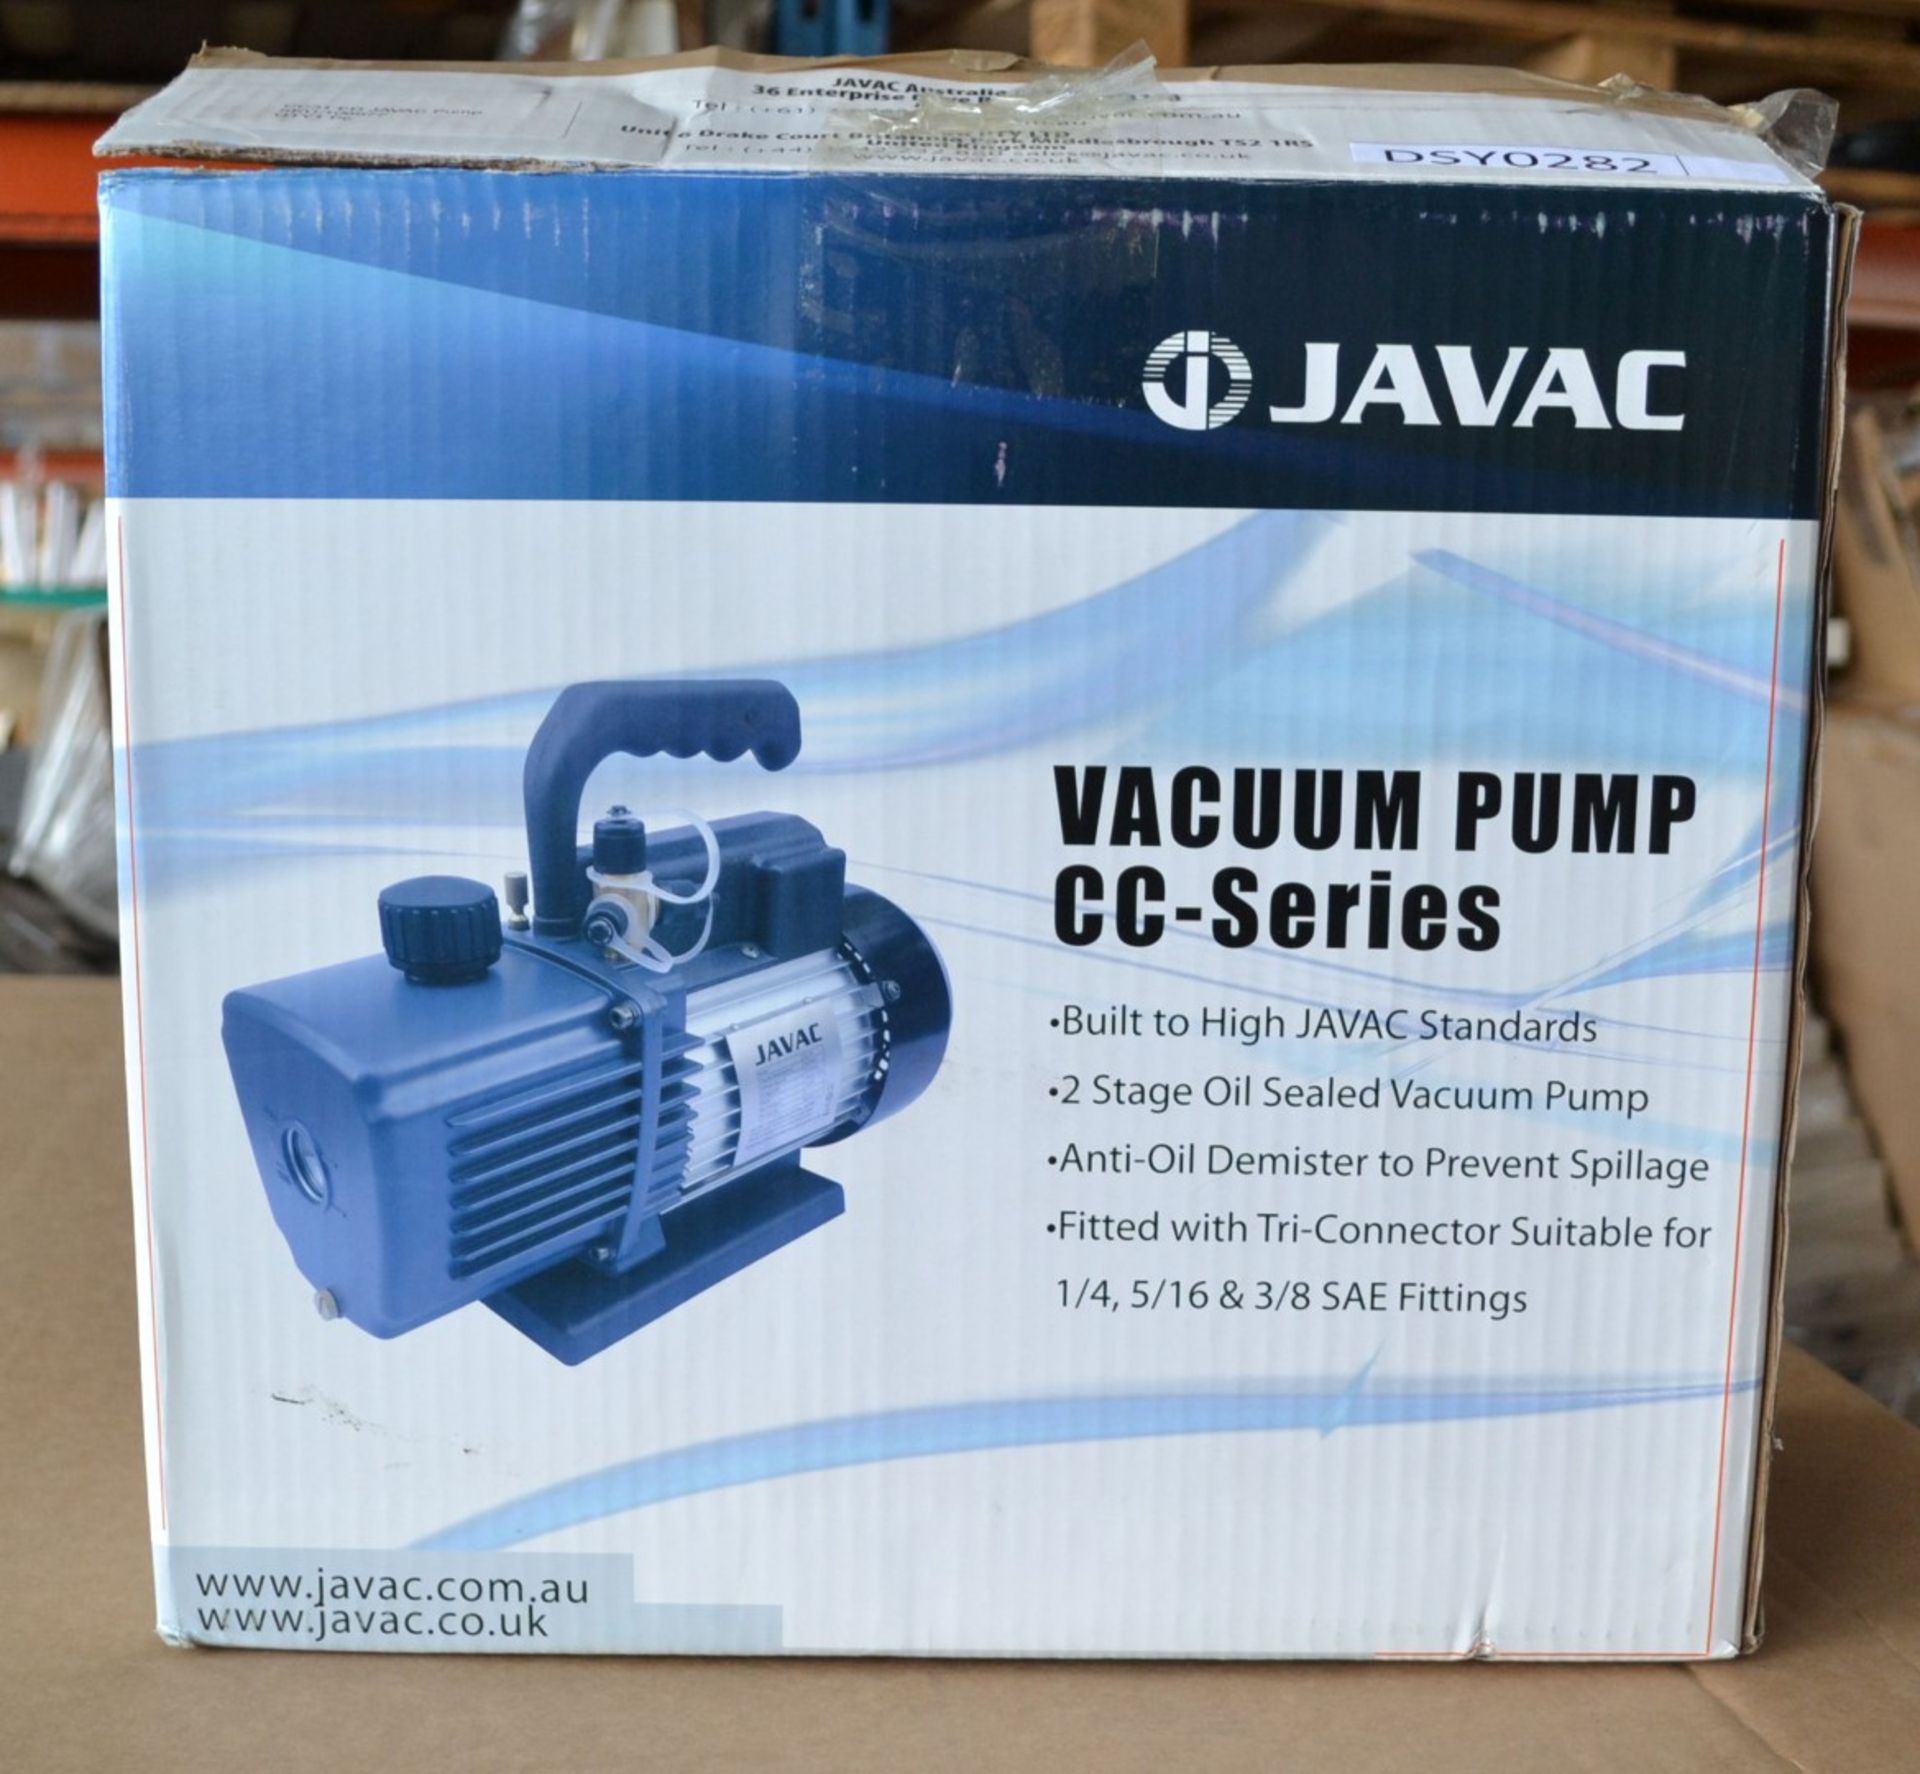 1 x Javac Vacuum Pump - 40Lt/min - Science/Educational - CL185 - Ref: DSY0282 - Location: Stoke-on-T